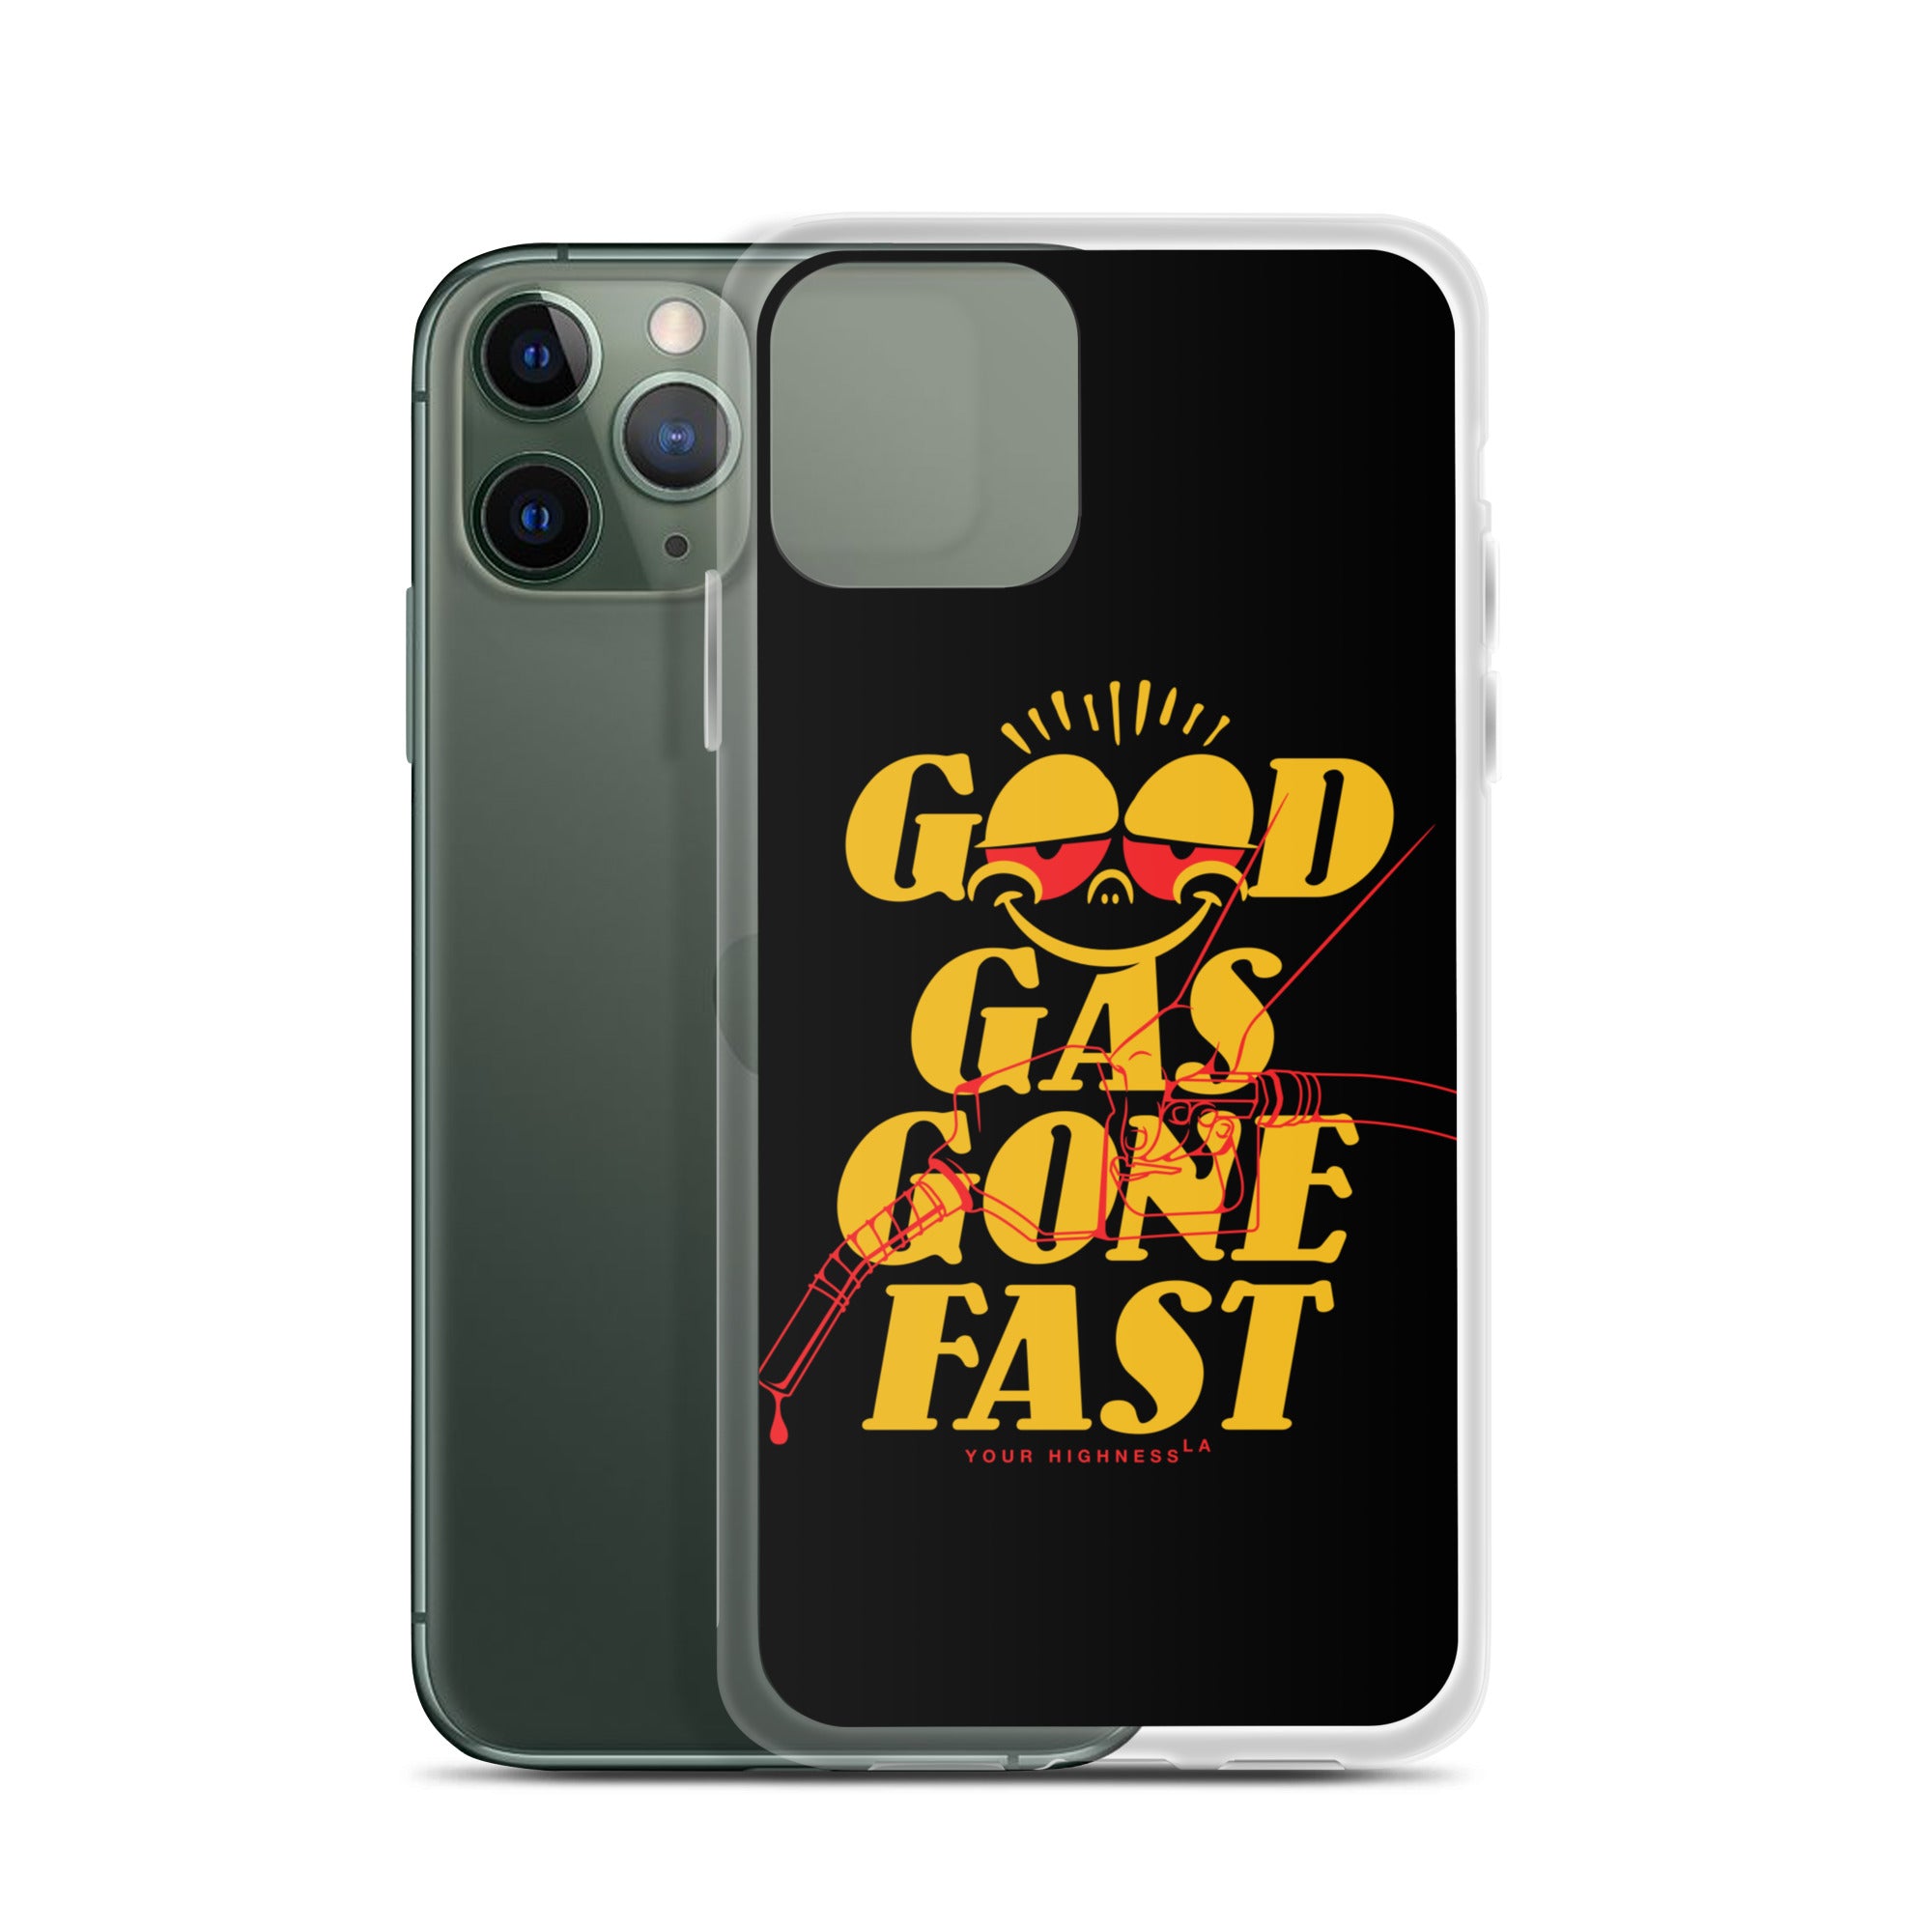 Good Gas iPhone Case